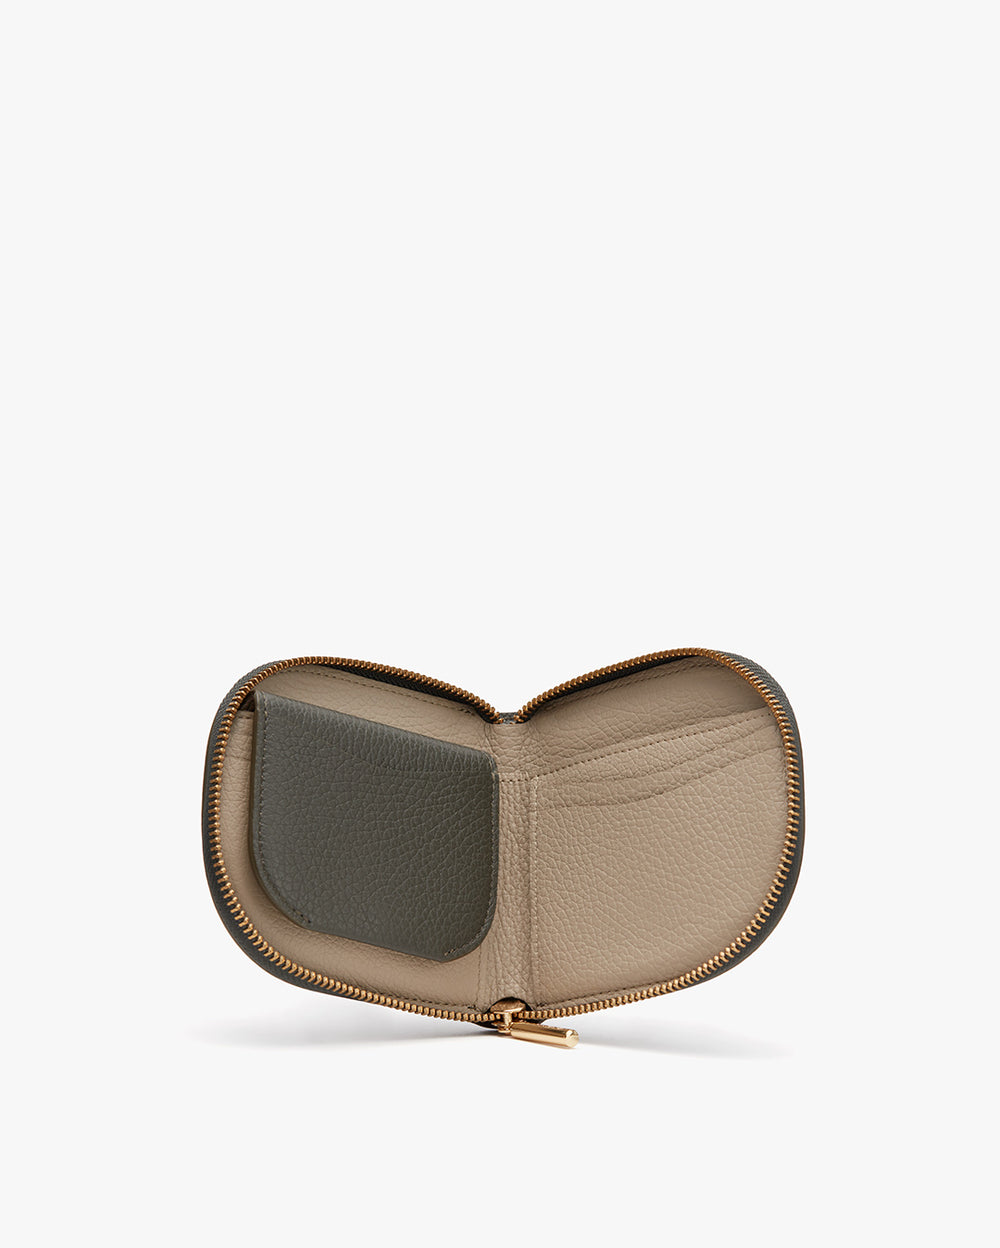 Open heart-shaped purse on a plain background.